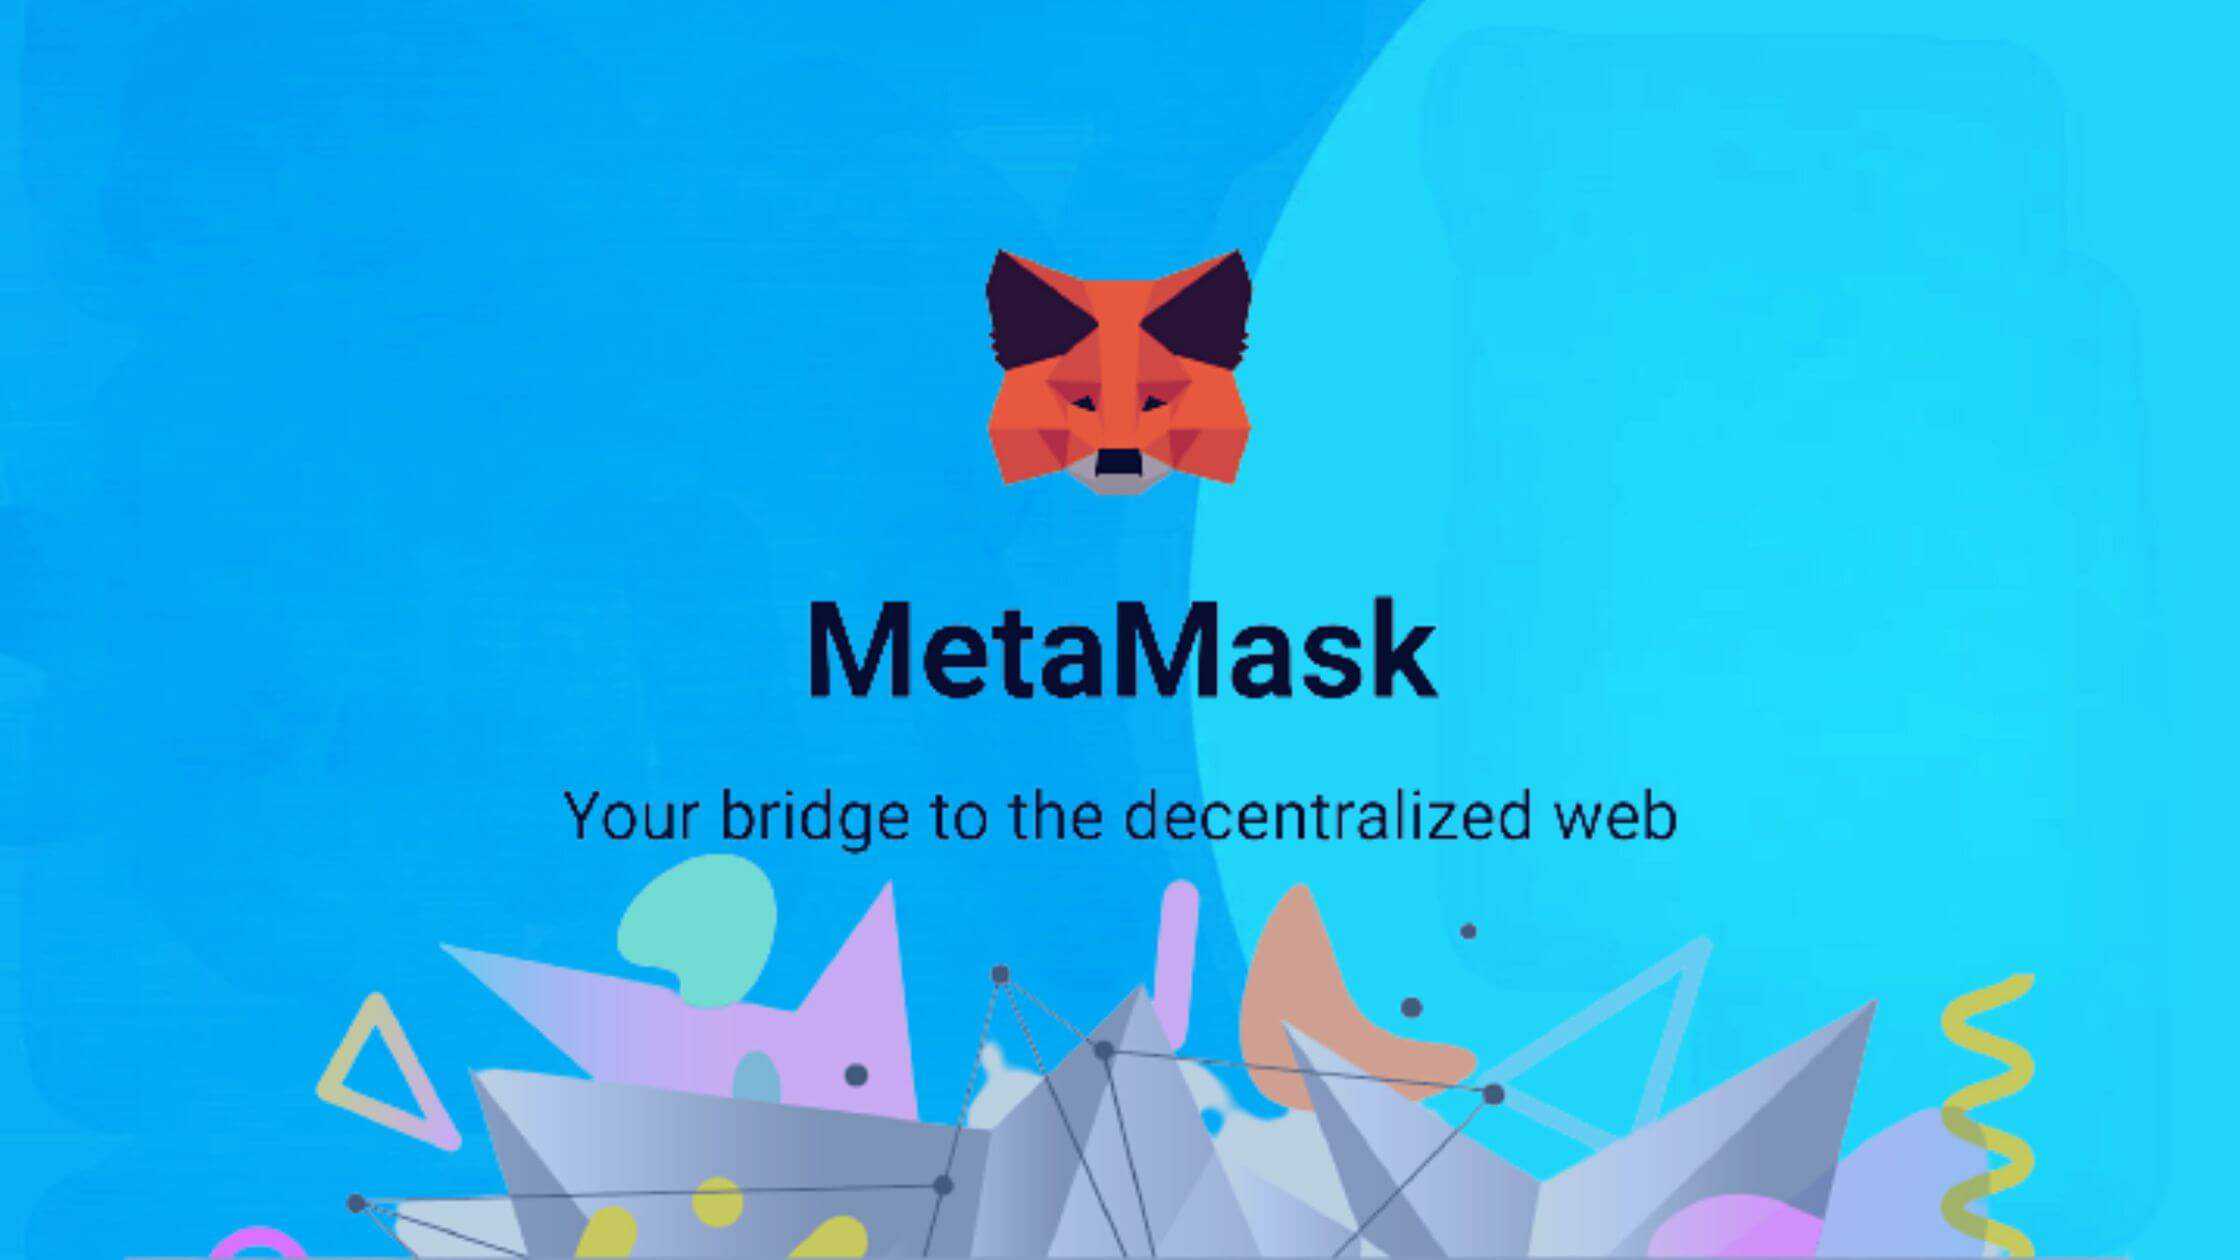 About Metamask